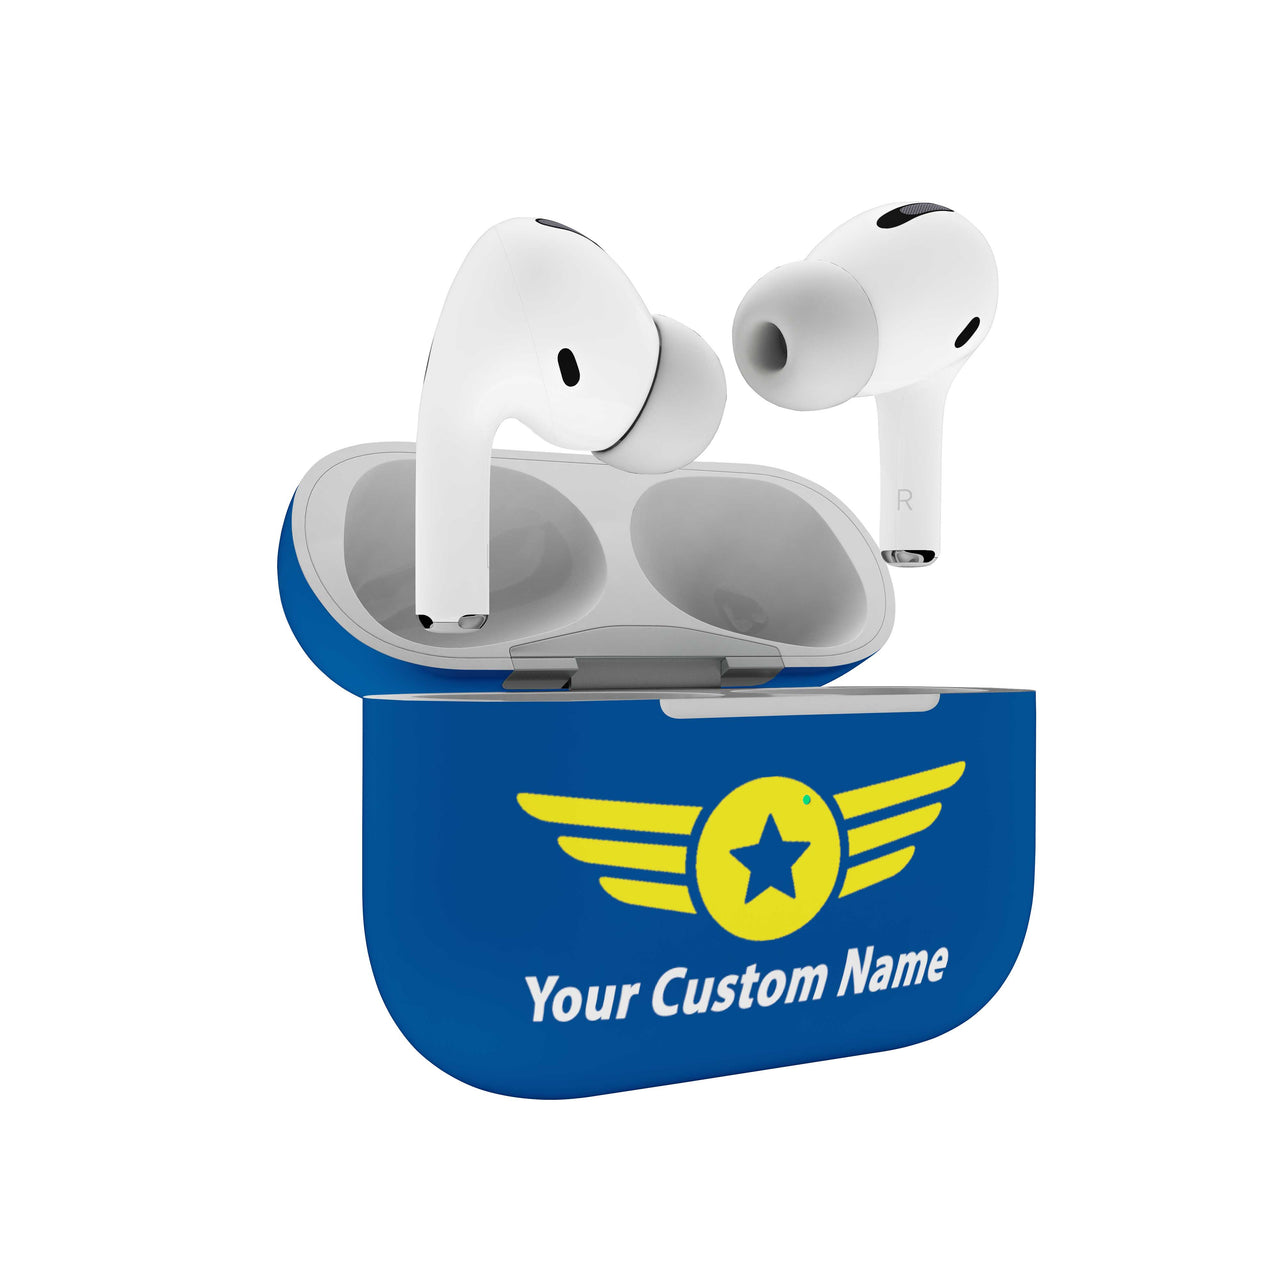 Custom Name (Badge 4) Designed Airpods "Pro" Cases